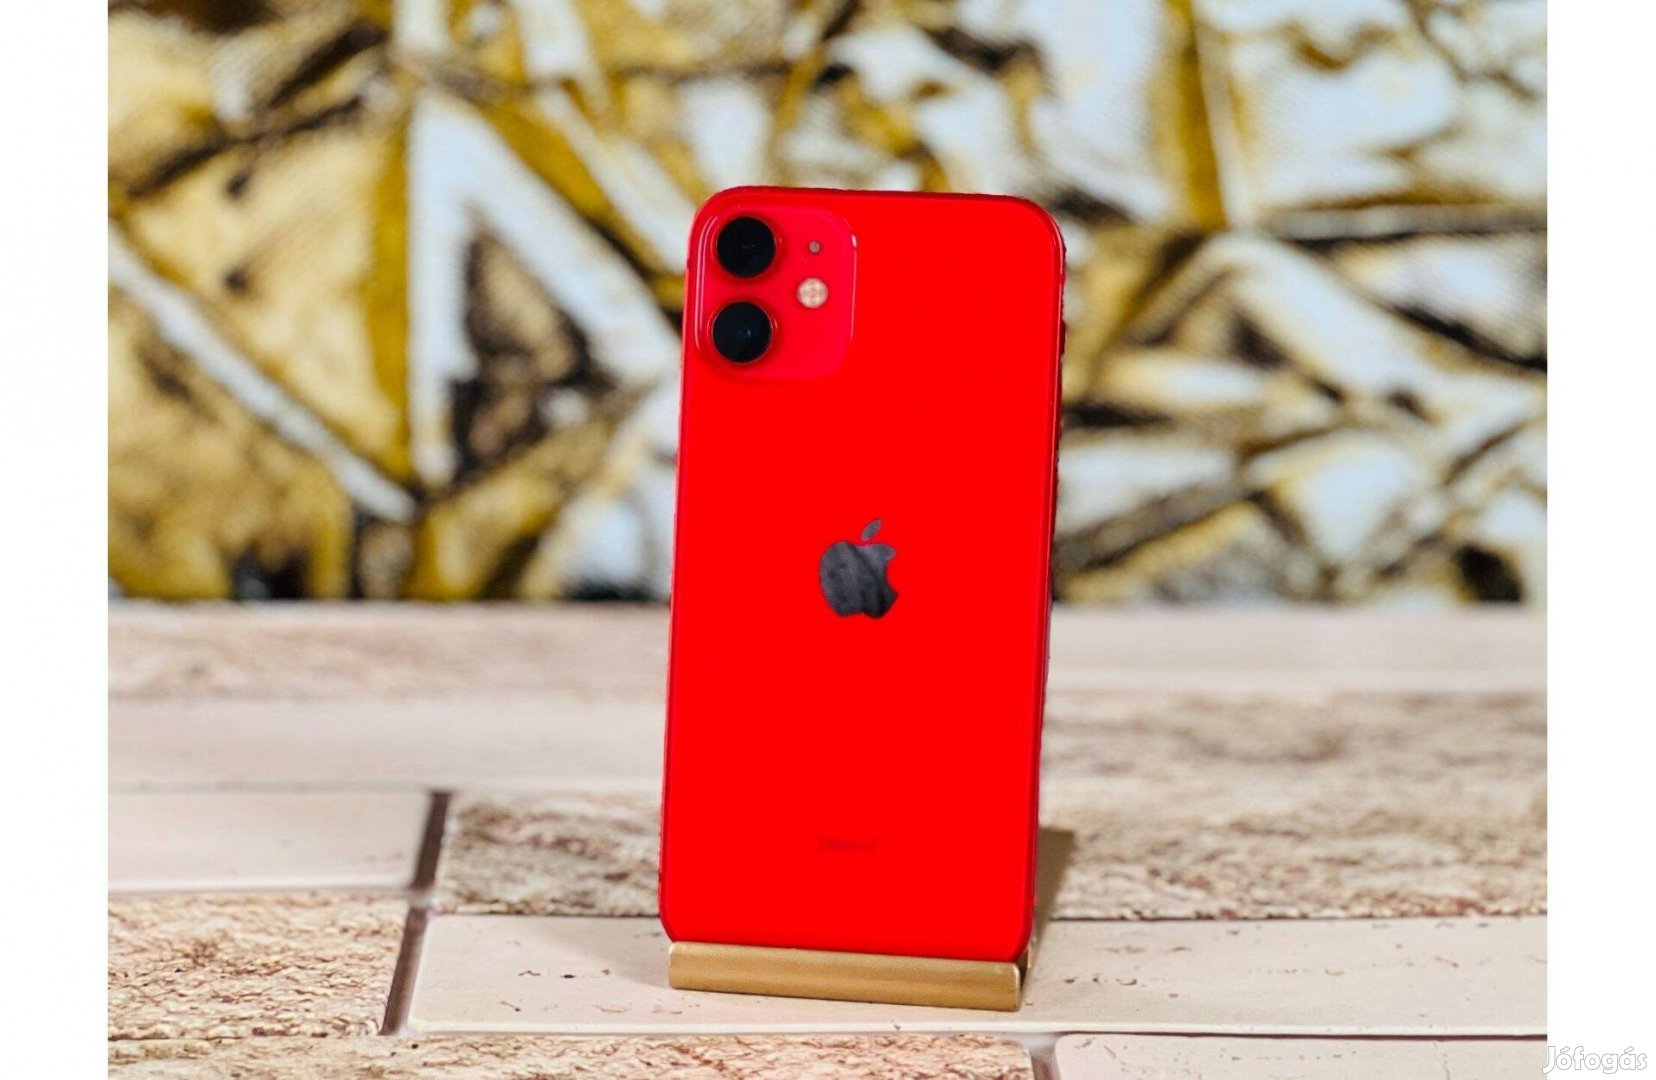 Eladó iphone 12 Mini 128 GB Product RED szép - 12 Hó Gari - R795